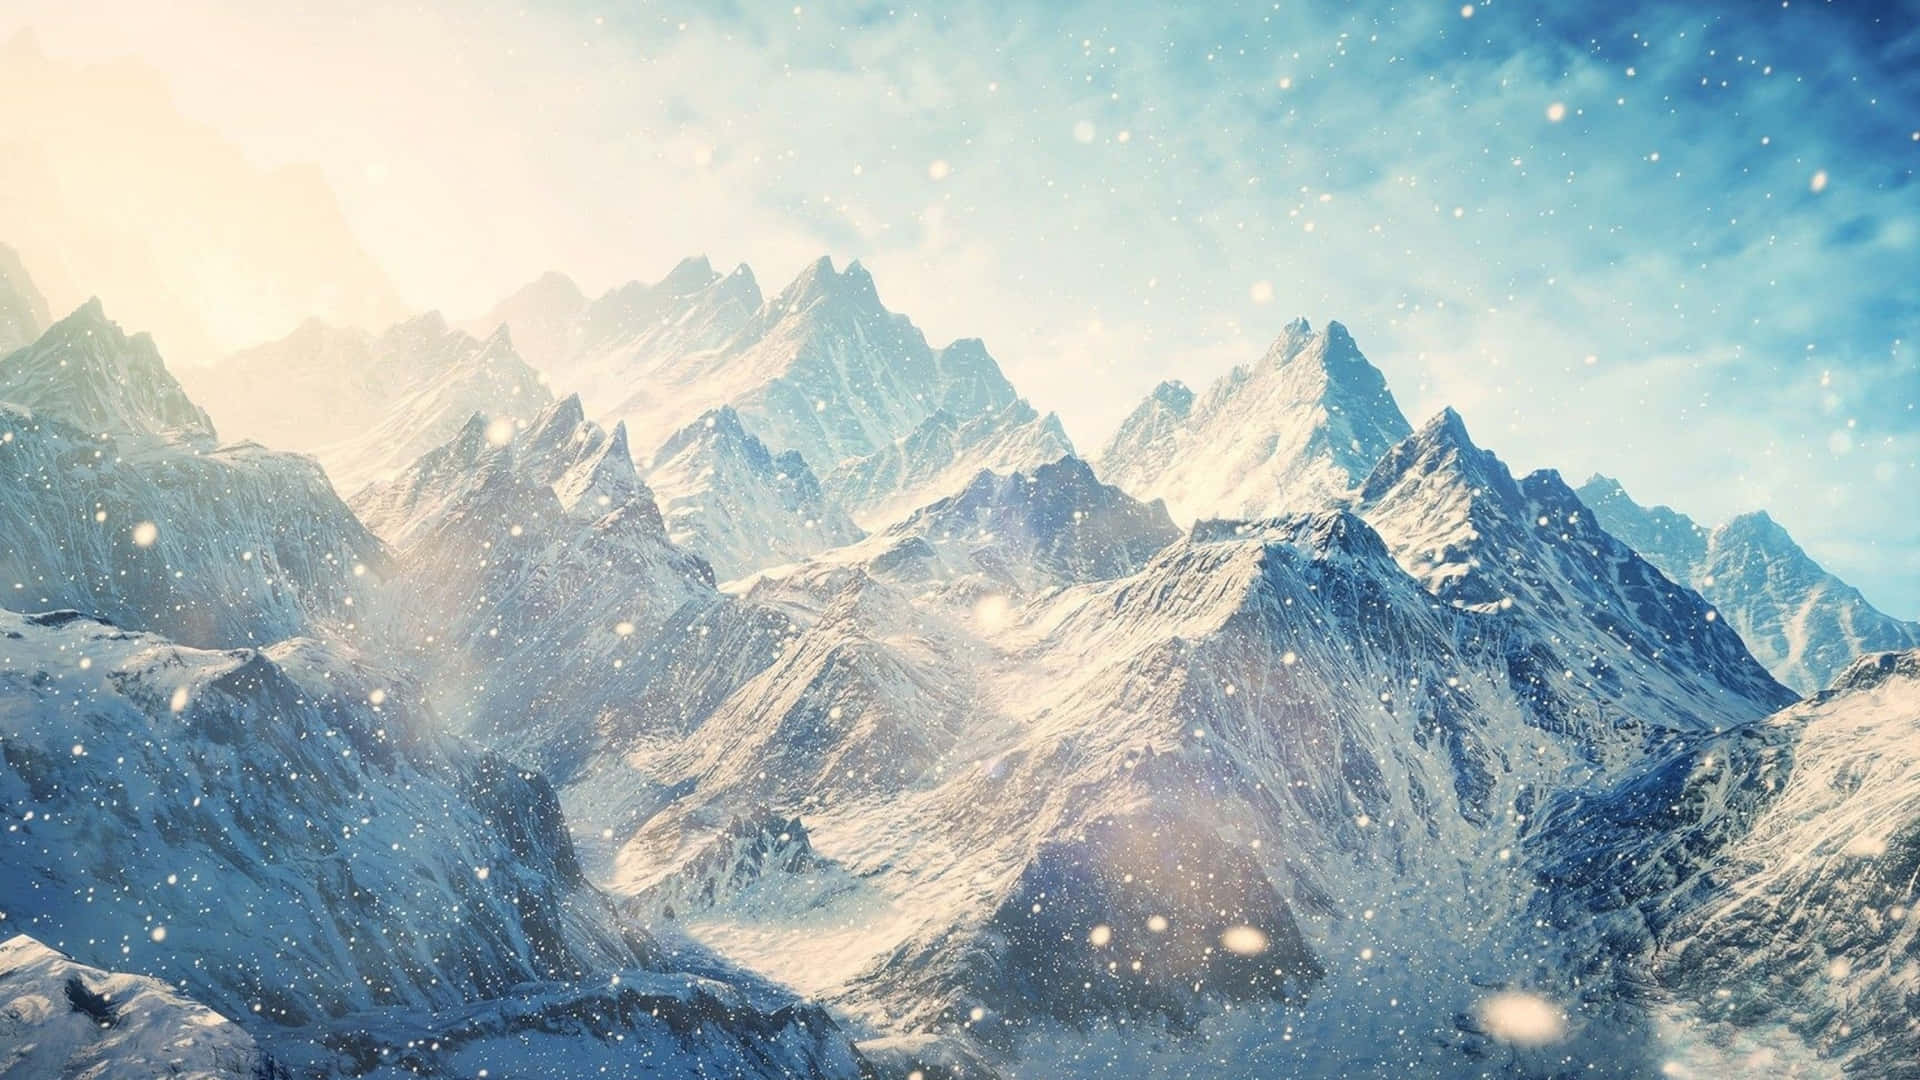 Snow Mountain Background Wallpaper